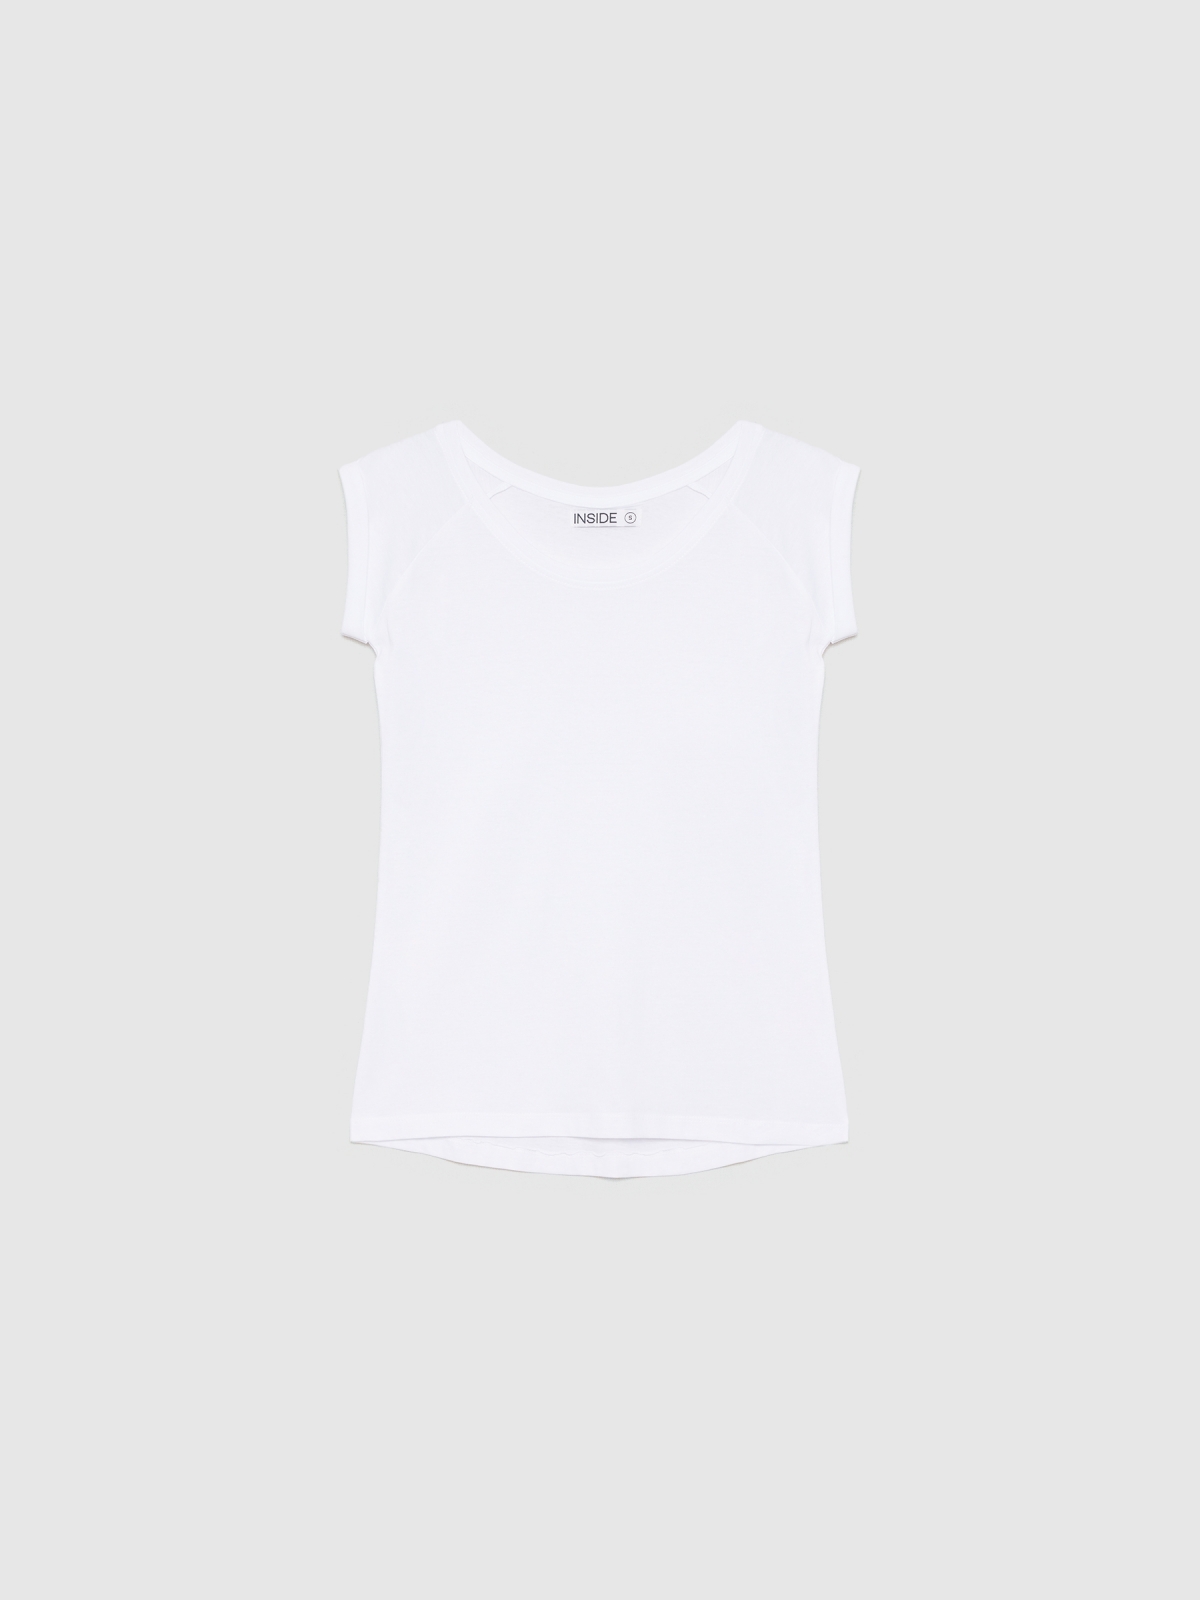  Basic short sleeve t-shirt white